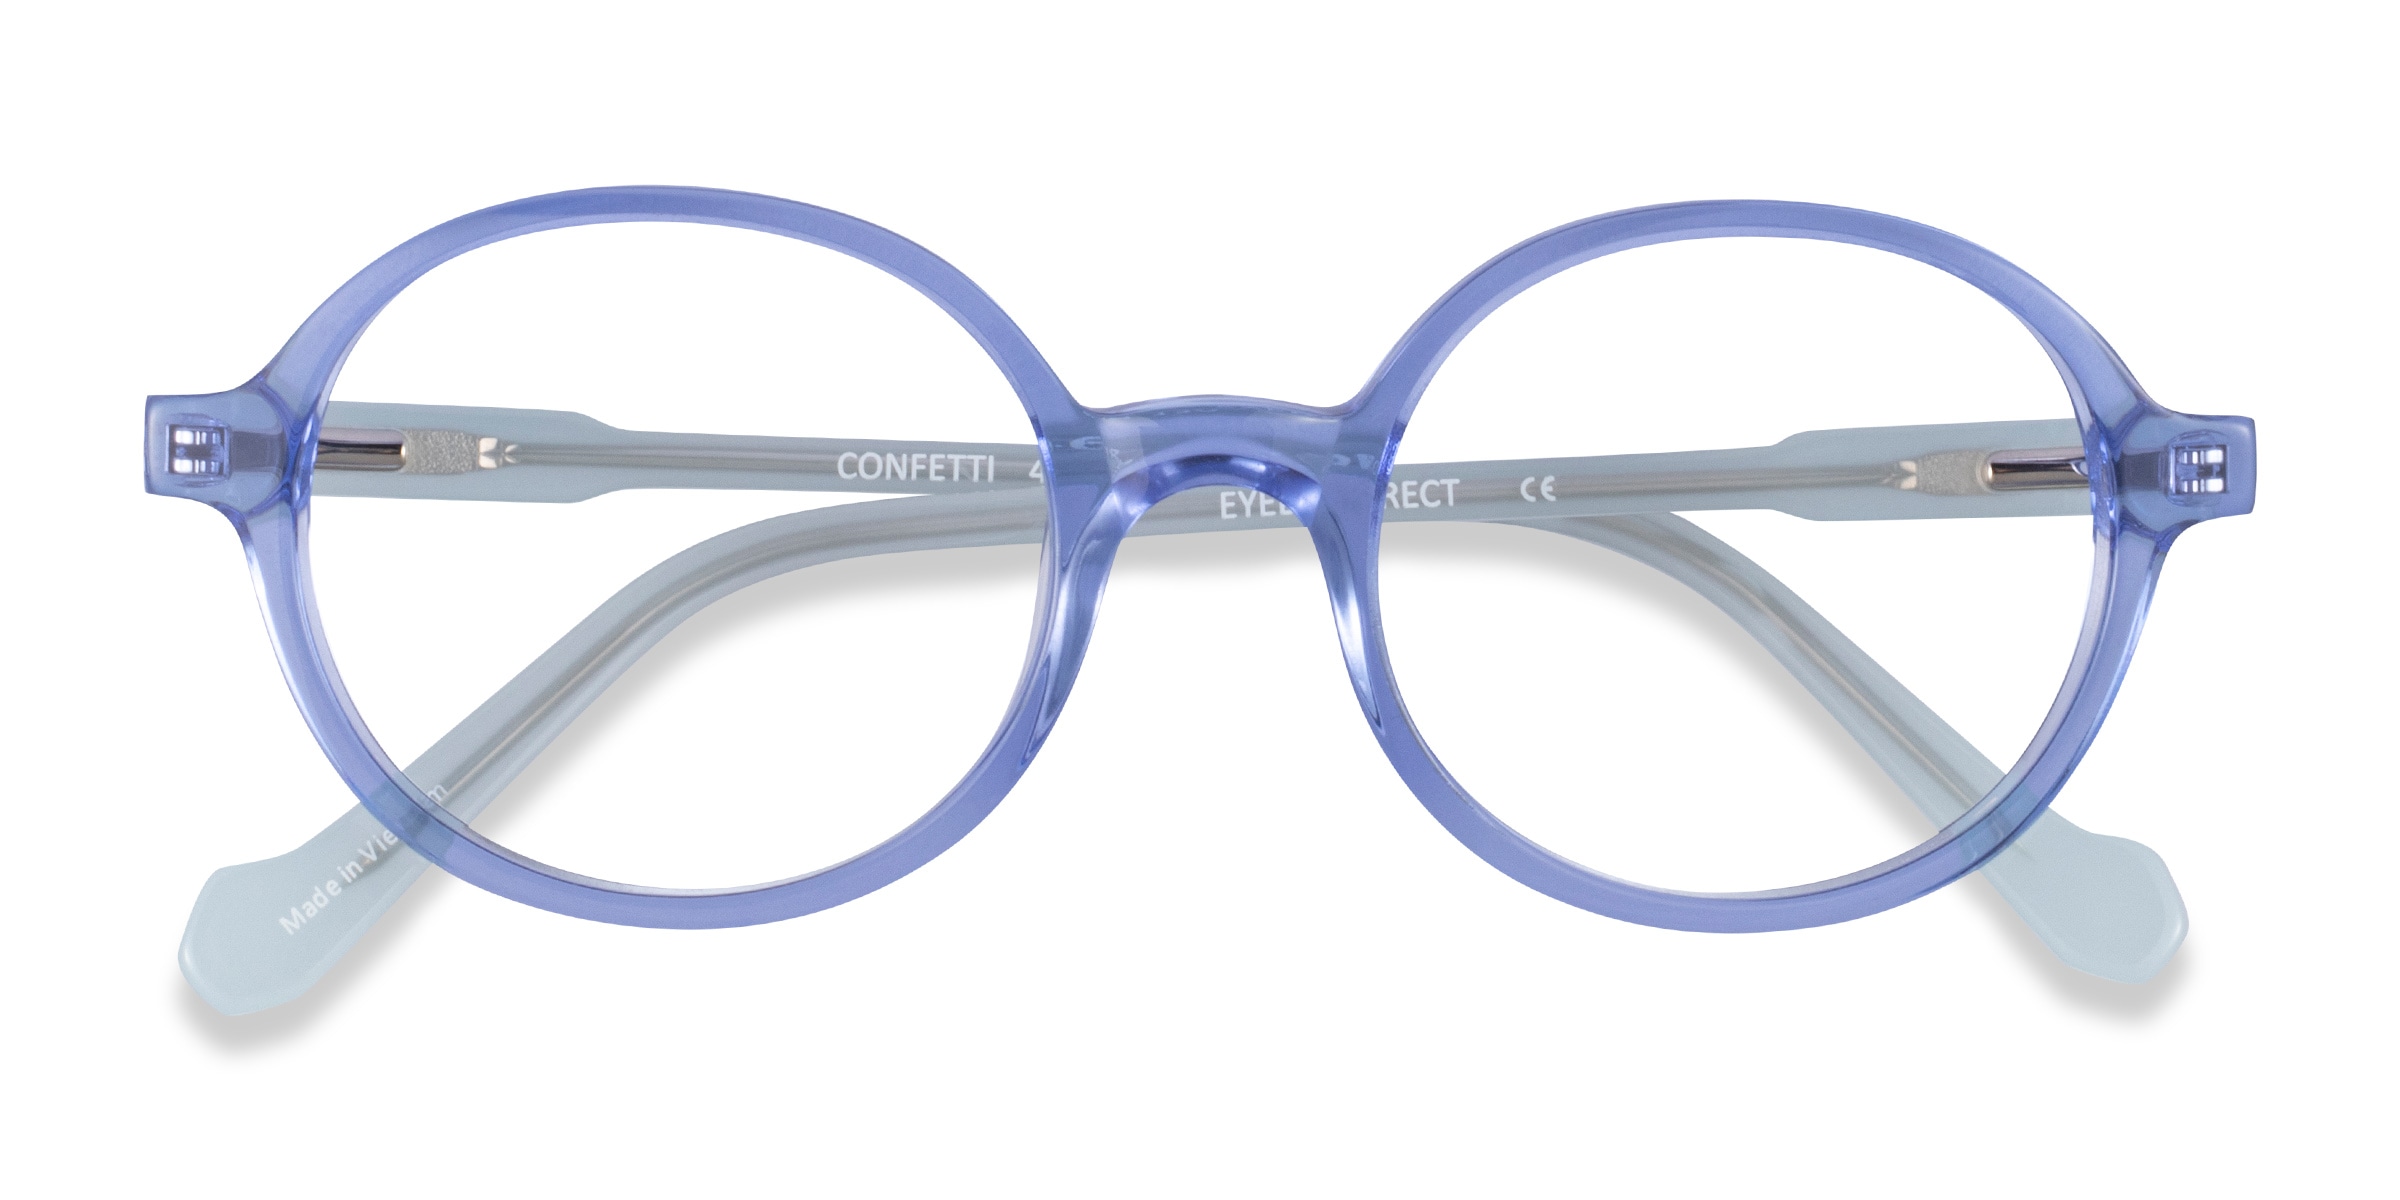 SALUTUYA Confetti Glasses Bright Color 28g for Goods